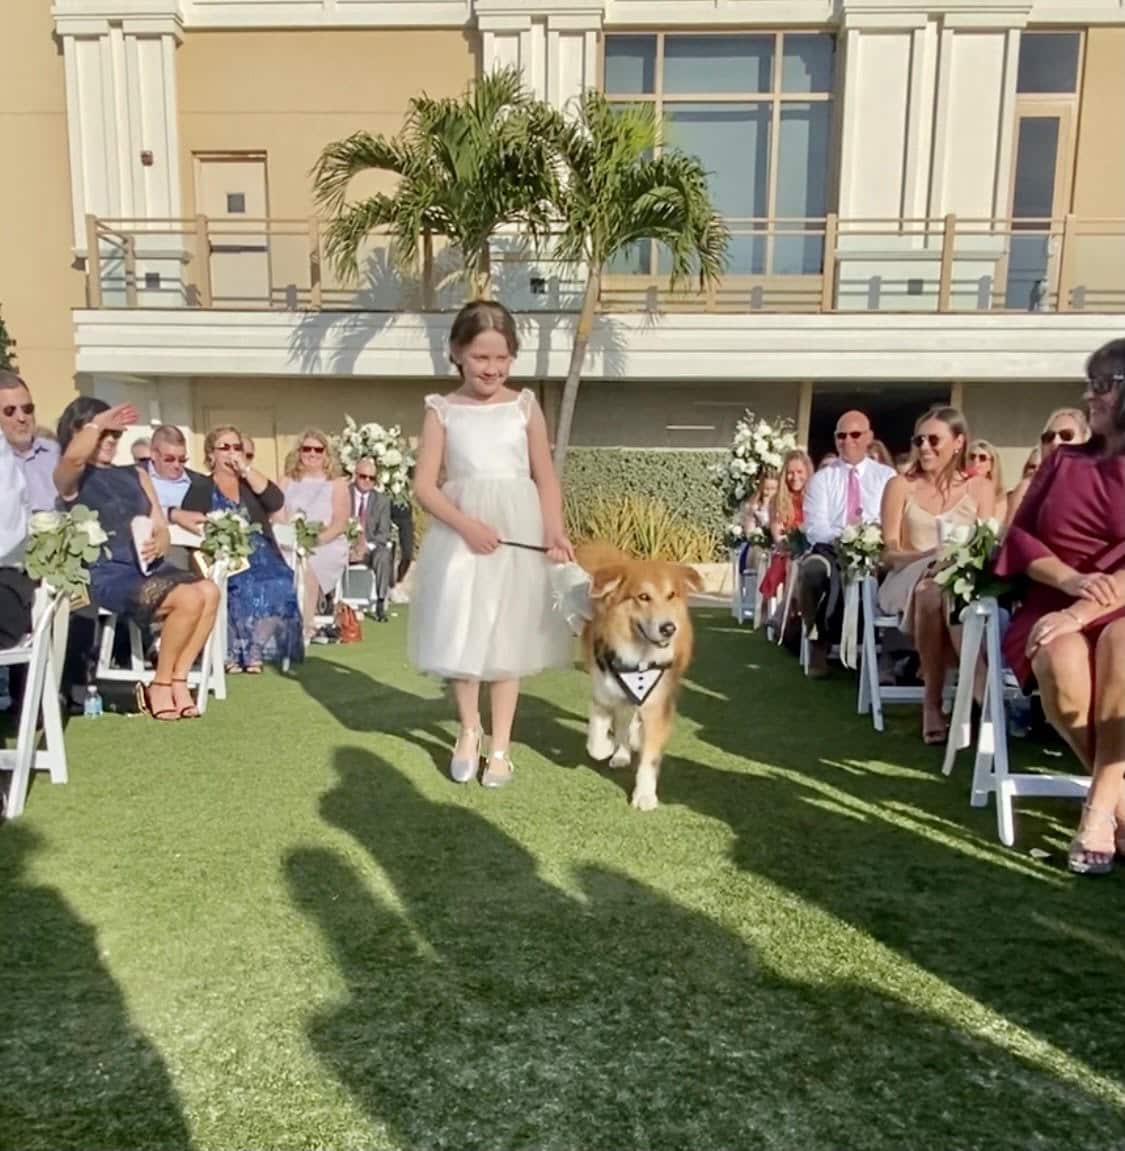 dog walking down the aisle at the wedding